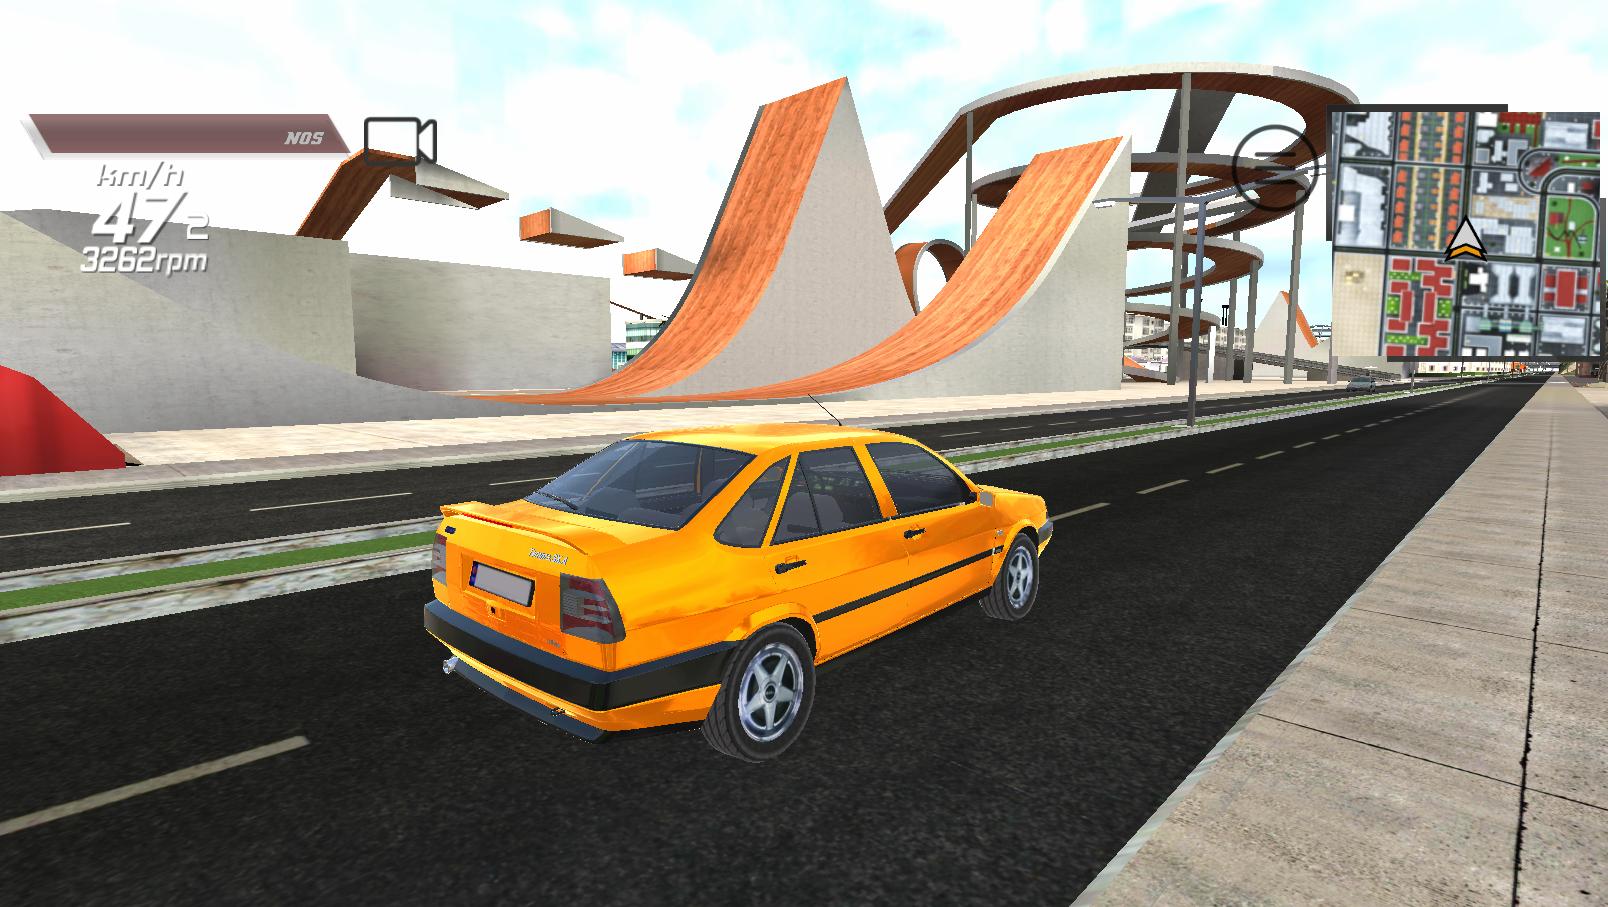 Tempra - City Simulation, Quests and Parking 1.7 Screenshot 17